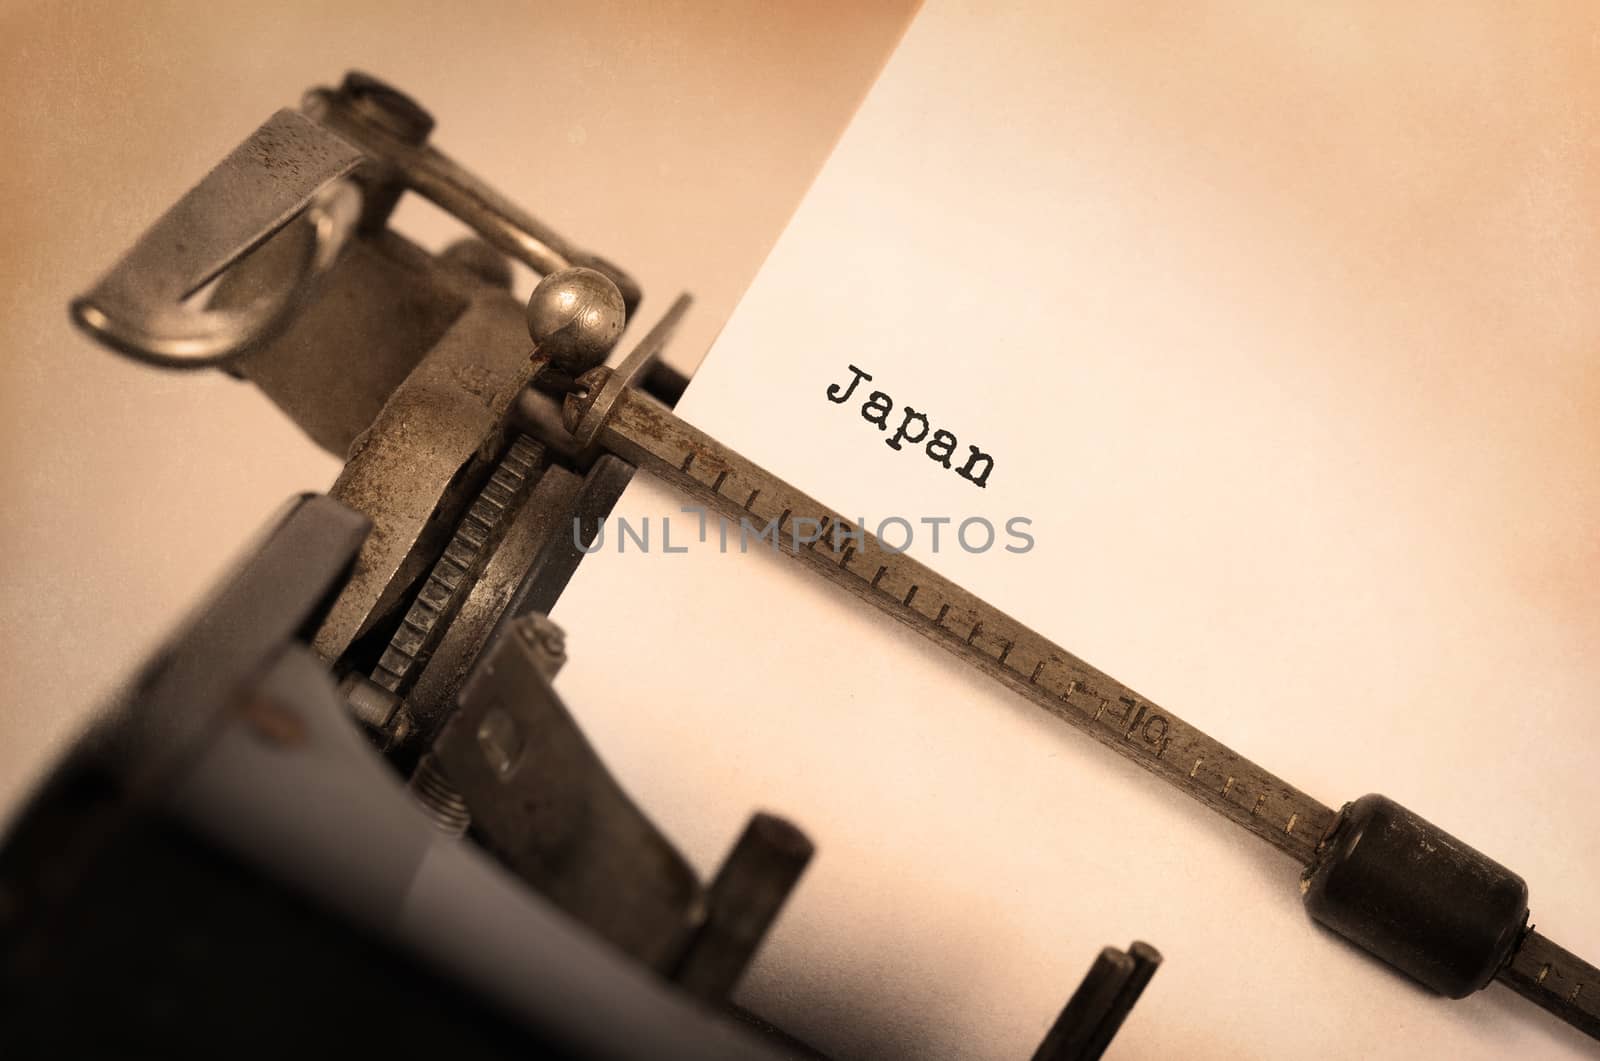 Old typewriter - Japan by michaklootwijk